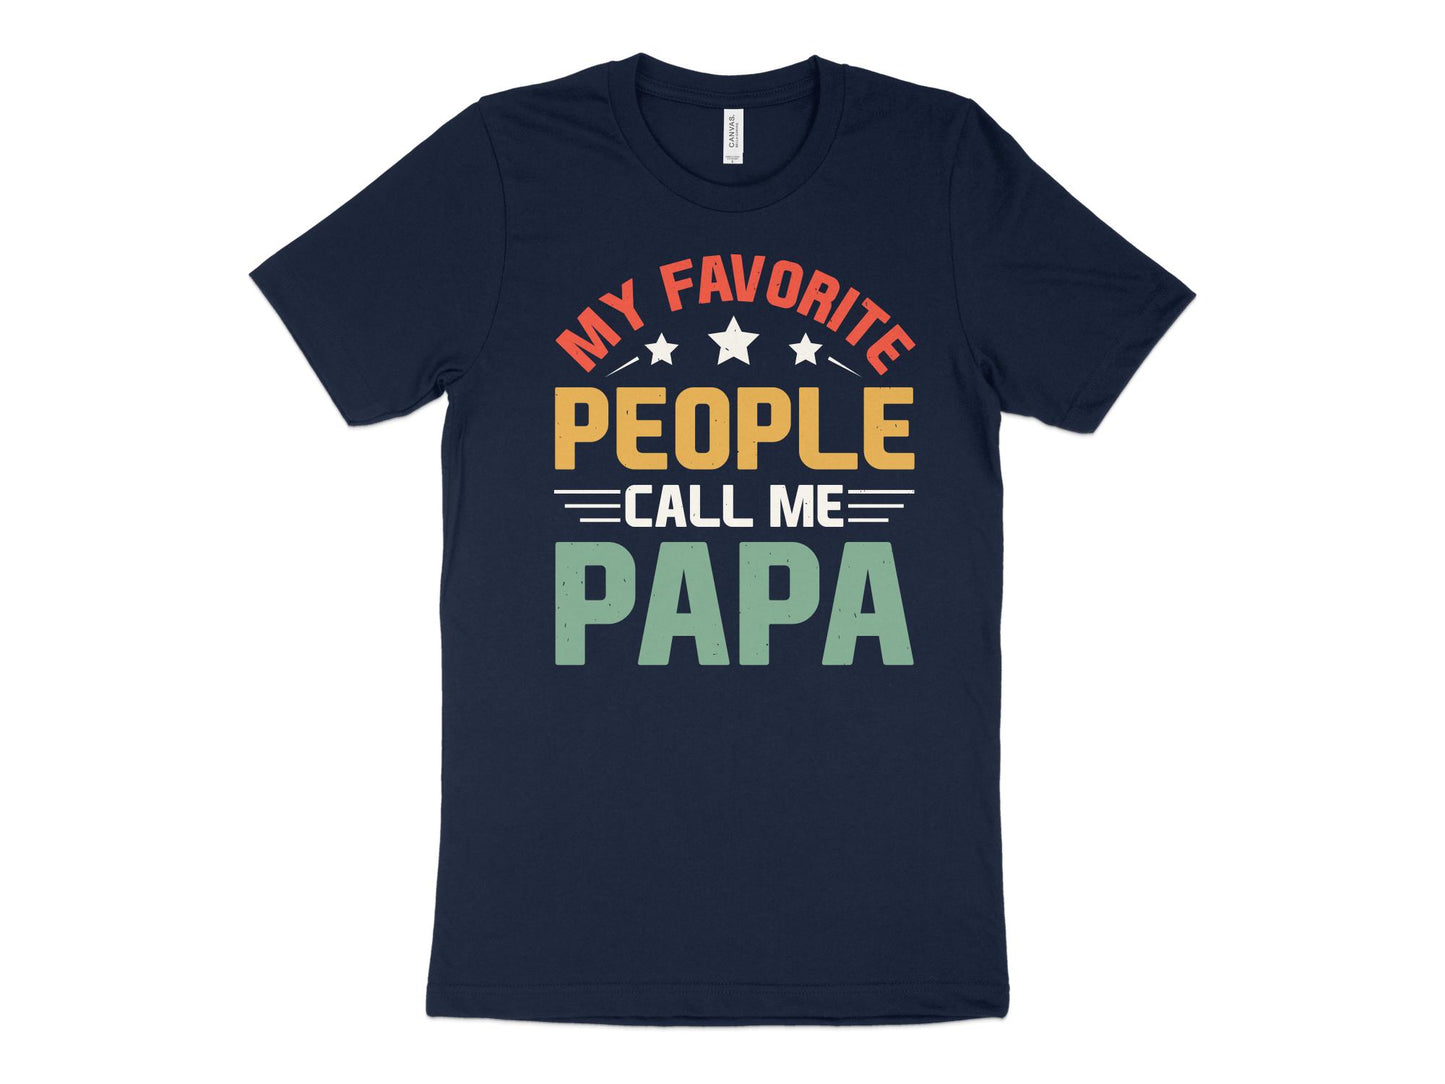 My Favorite People Call Me Papa Shirt, navy blue